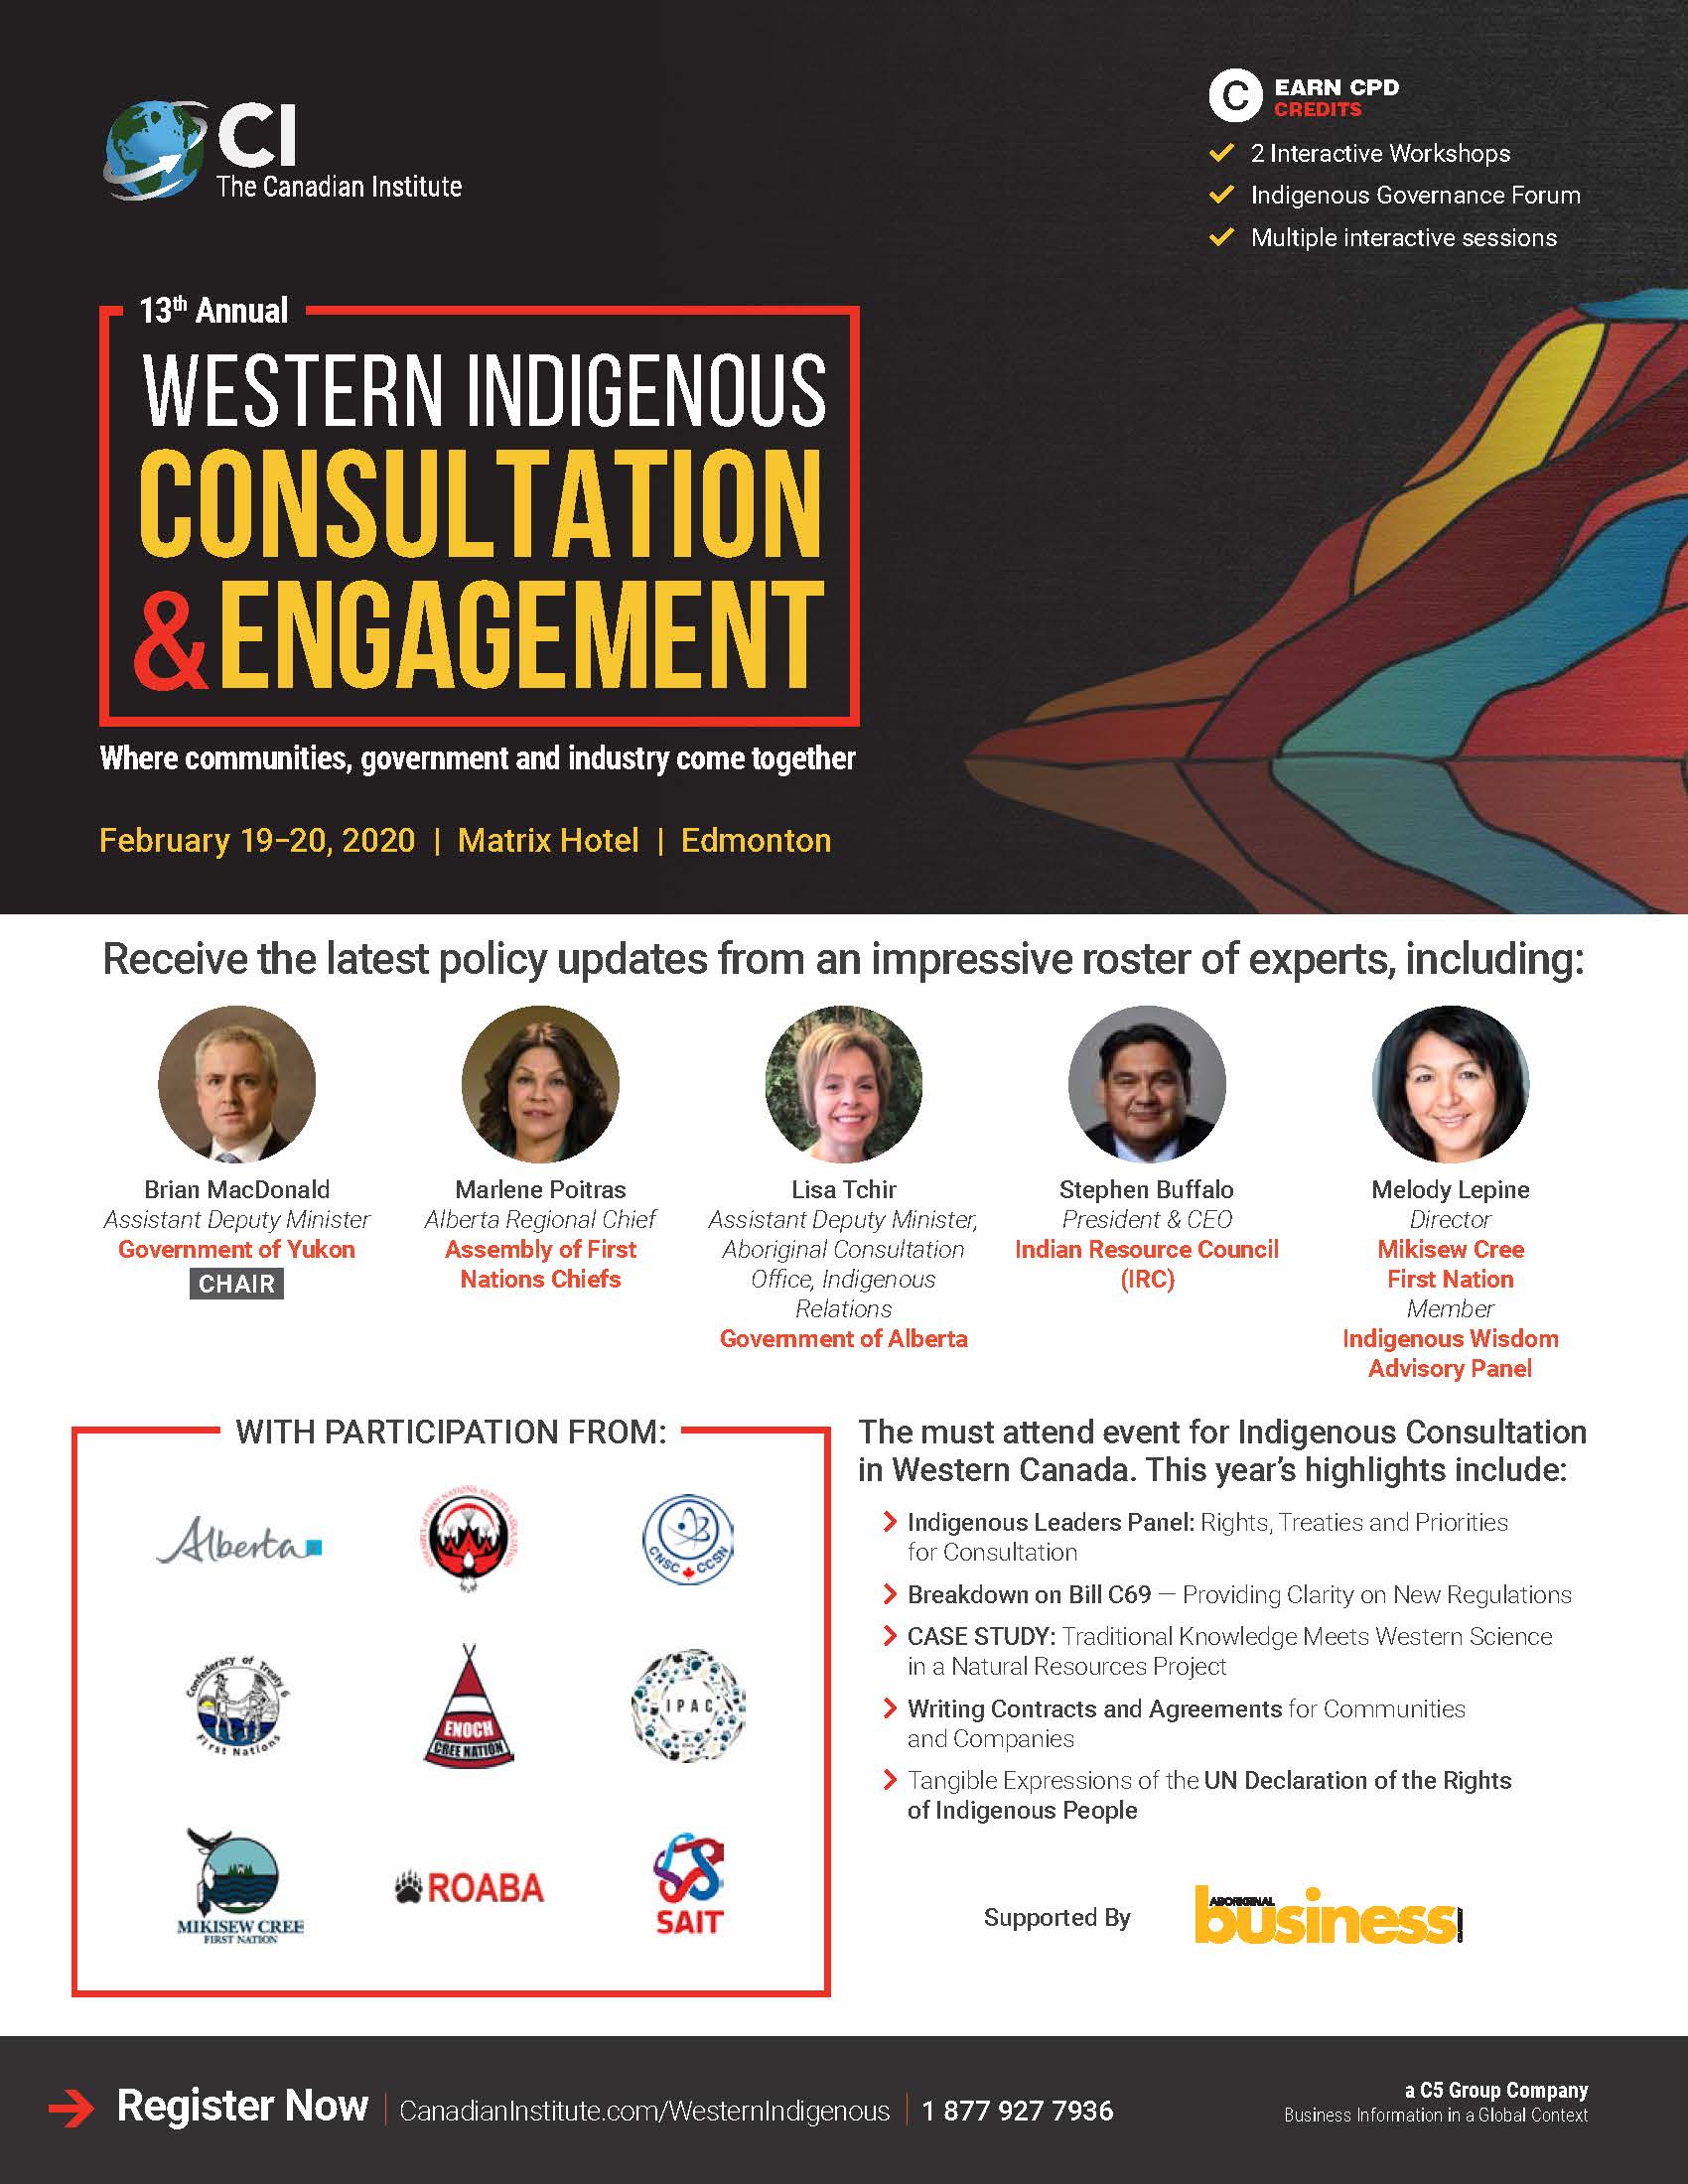 https://jfklaw.ca/wp-content/uploads/2020/01/Brochure-Western-Indigenous-Consultation-Engagement-Conference-2020-1.pdf